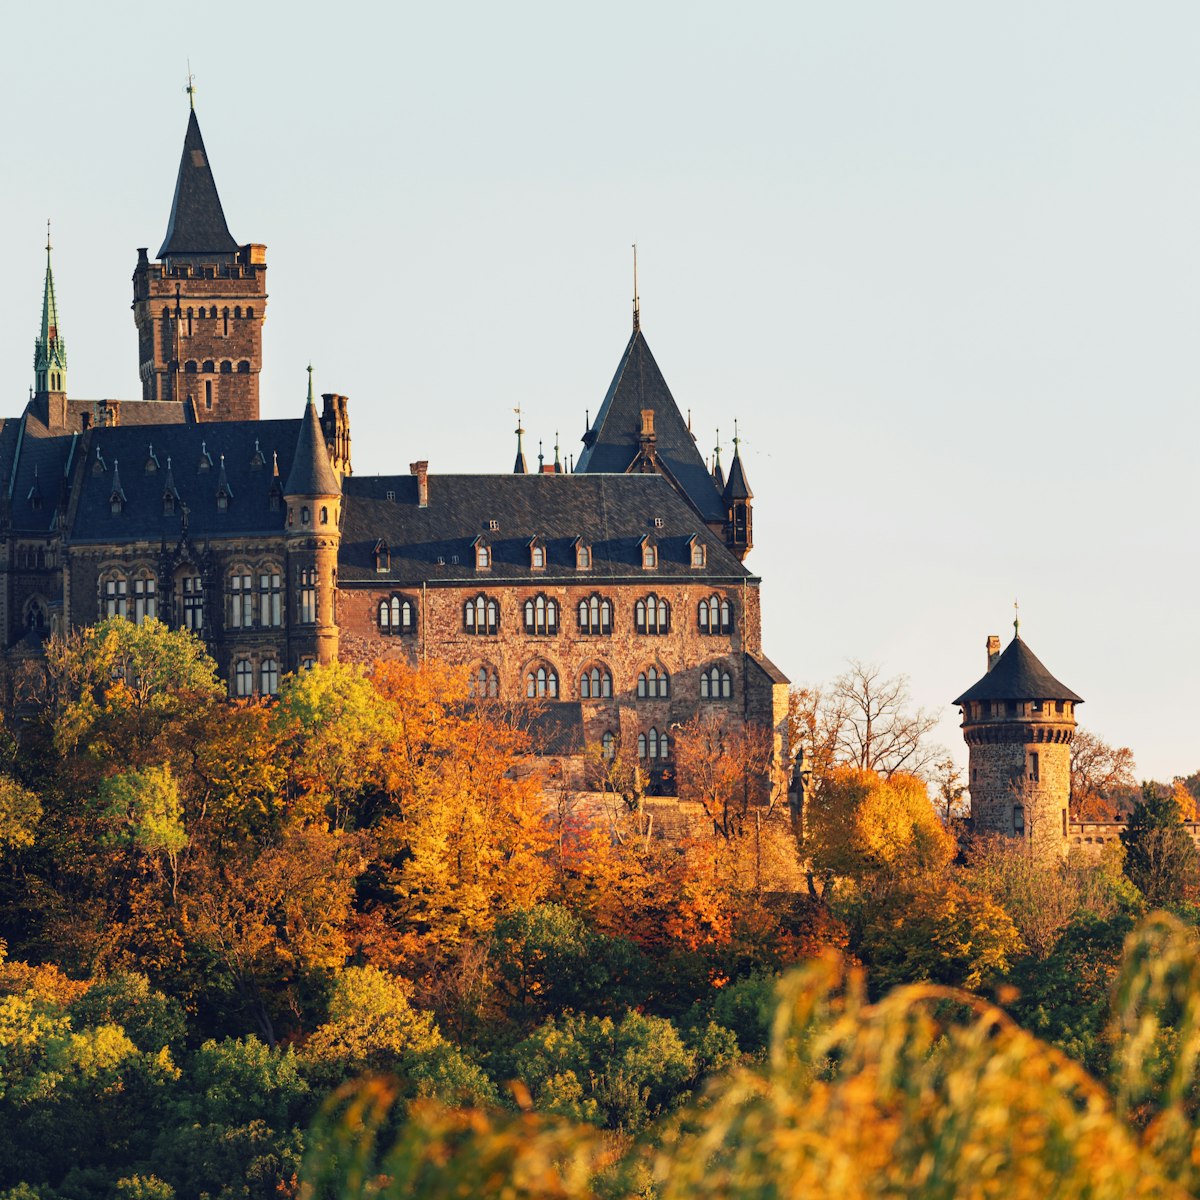 Historic Wernigerode Castle surrounded by an autumn landscape.